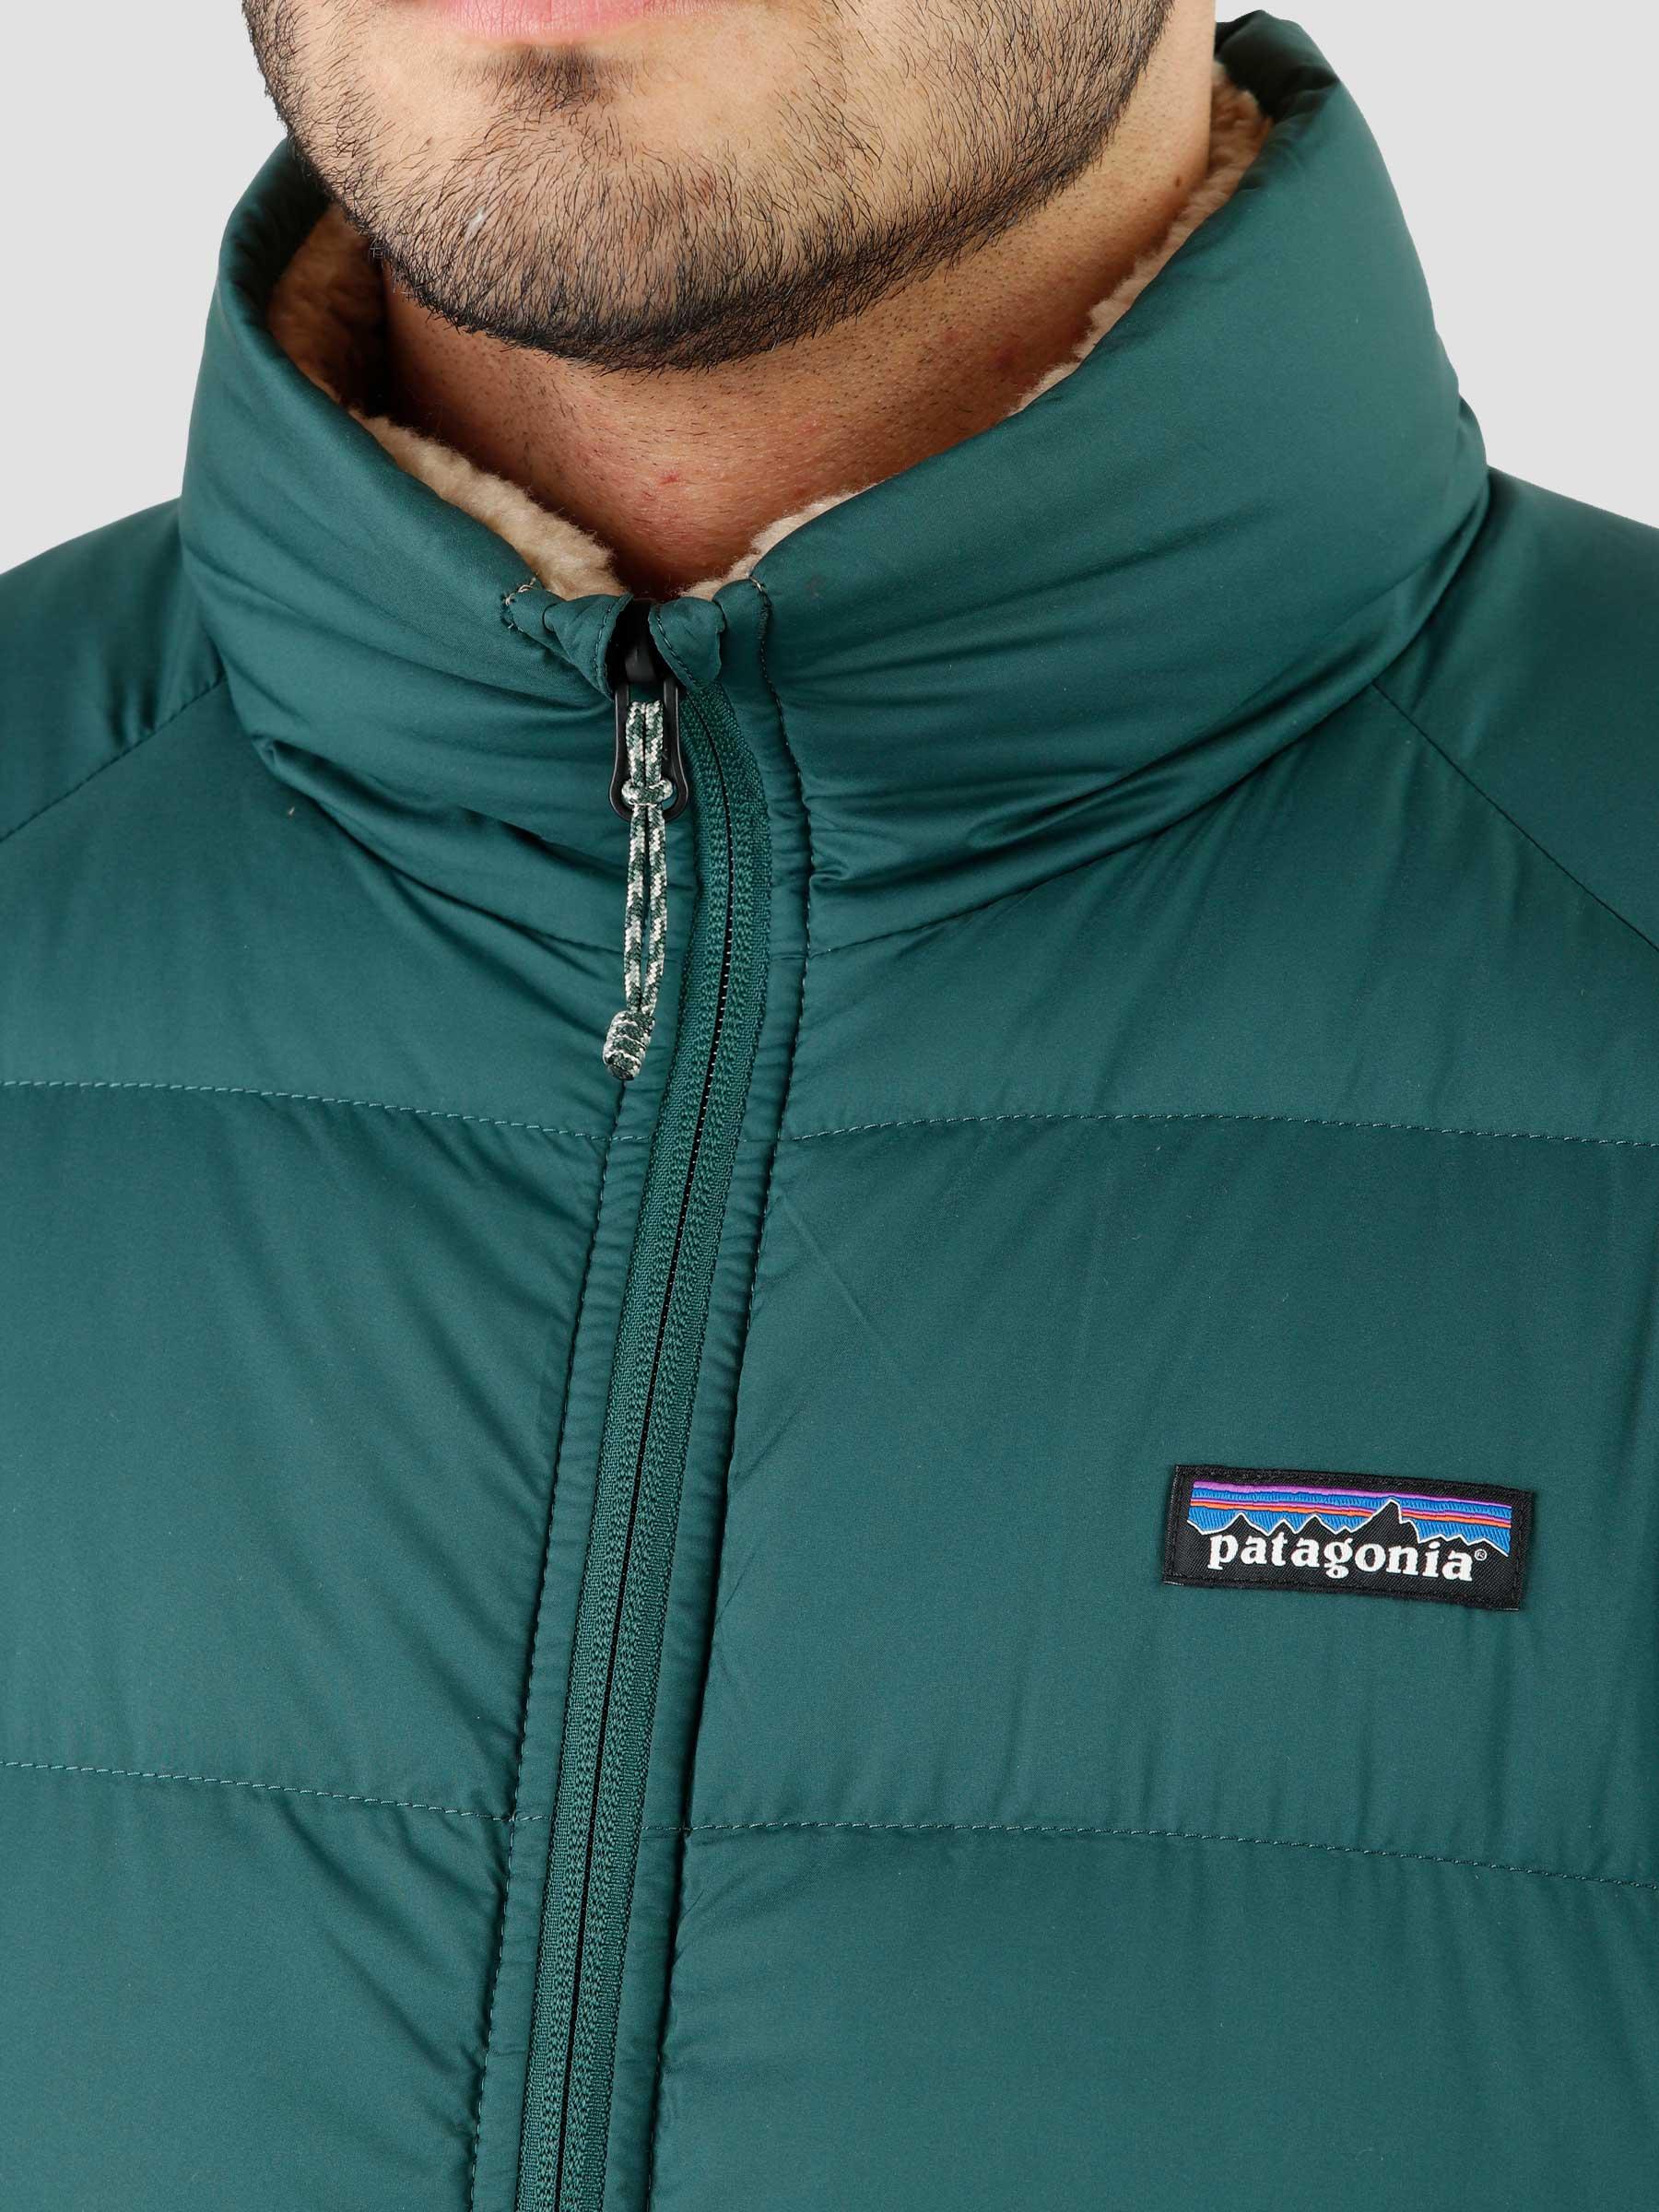 Patagonia Men's Reversible Silent Down Jacket